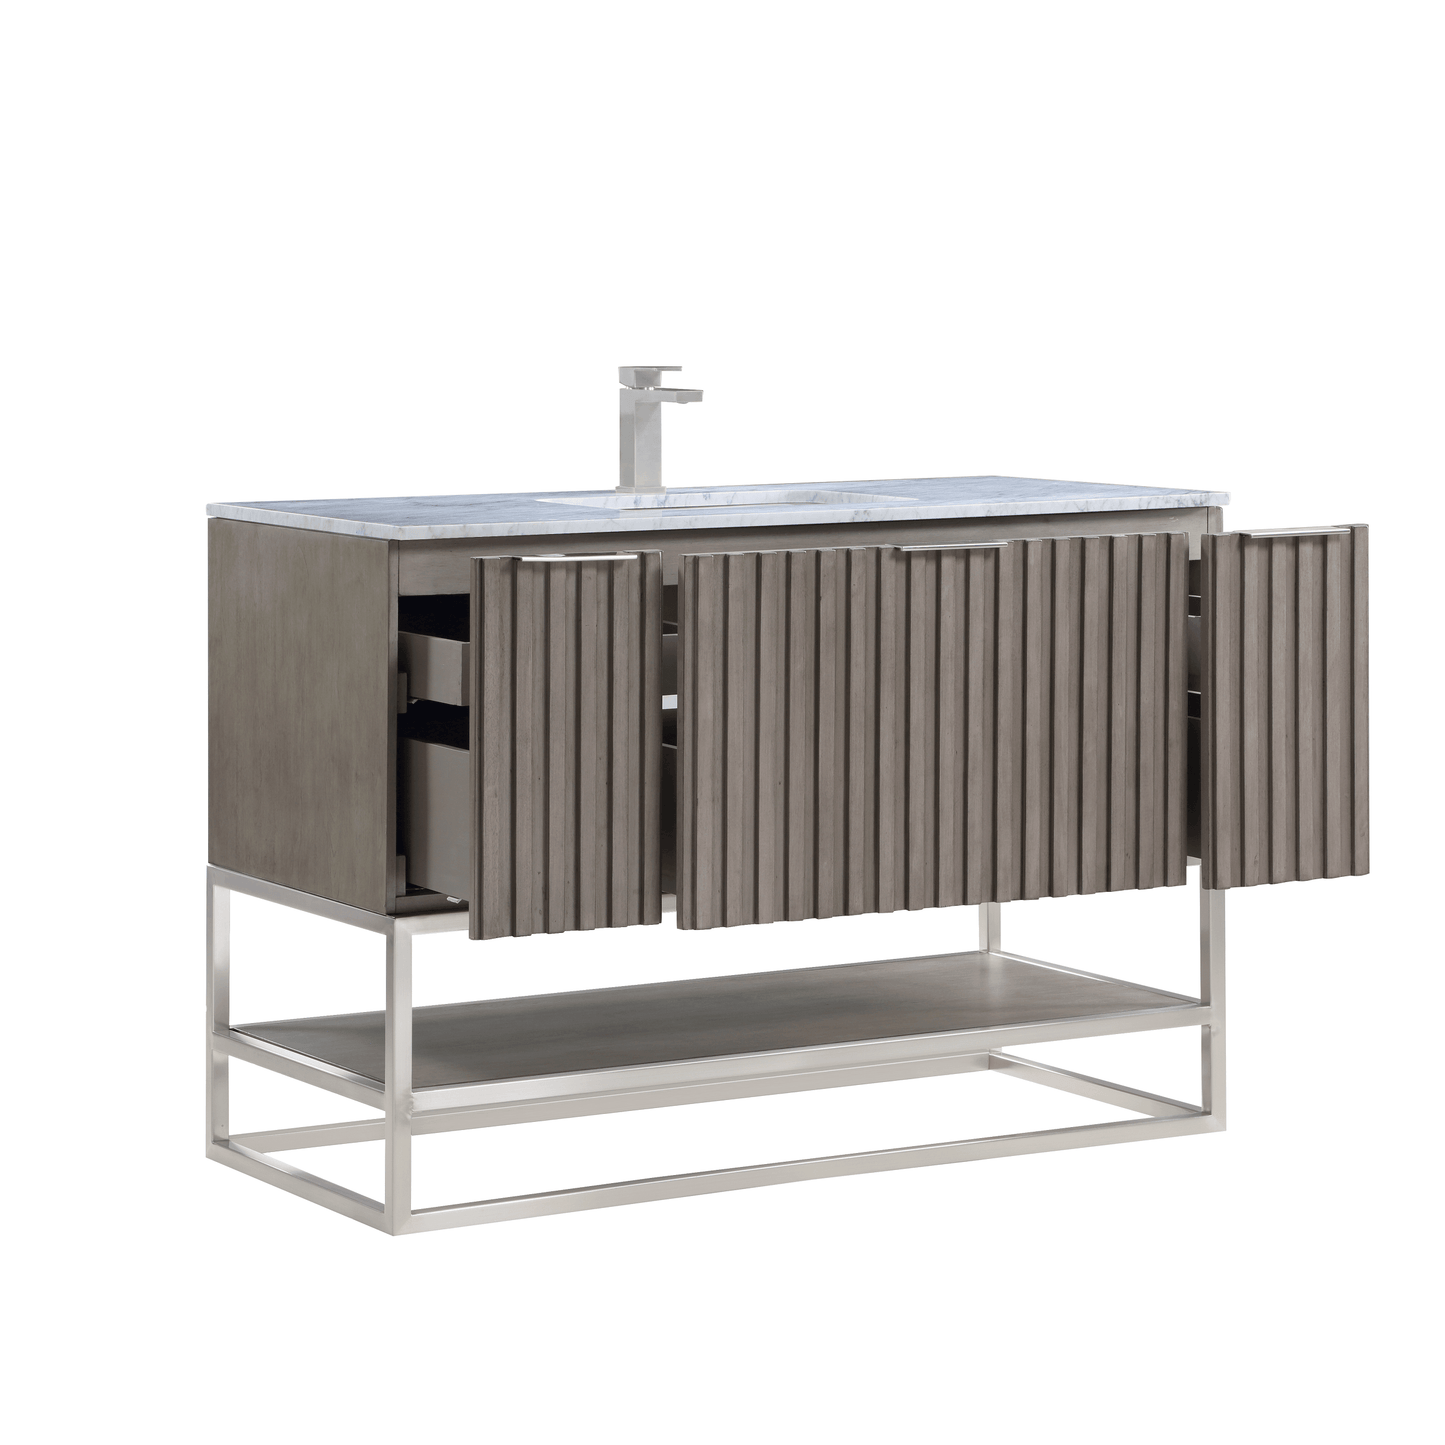 BEMMA Design Terra Single Bathroom Vanity Set in Graywash with Wh